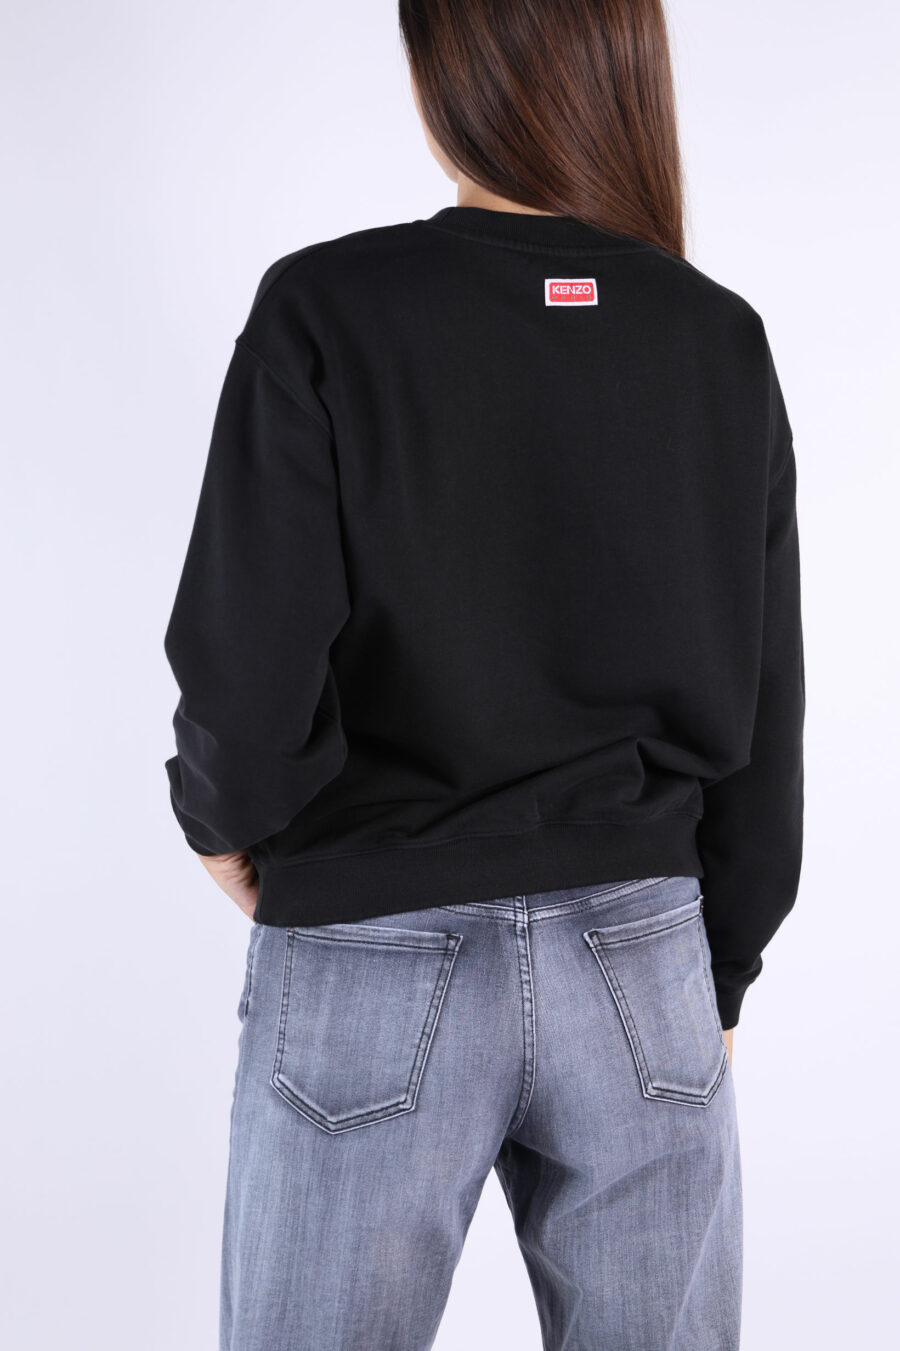 Schwarzes Sweatshirt mit gelbem "kenzo target" Logo - 361223054662202013